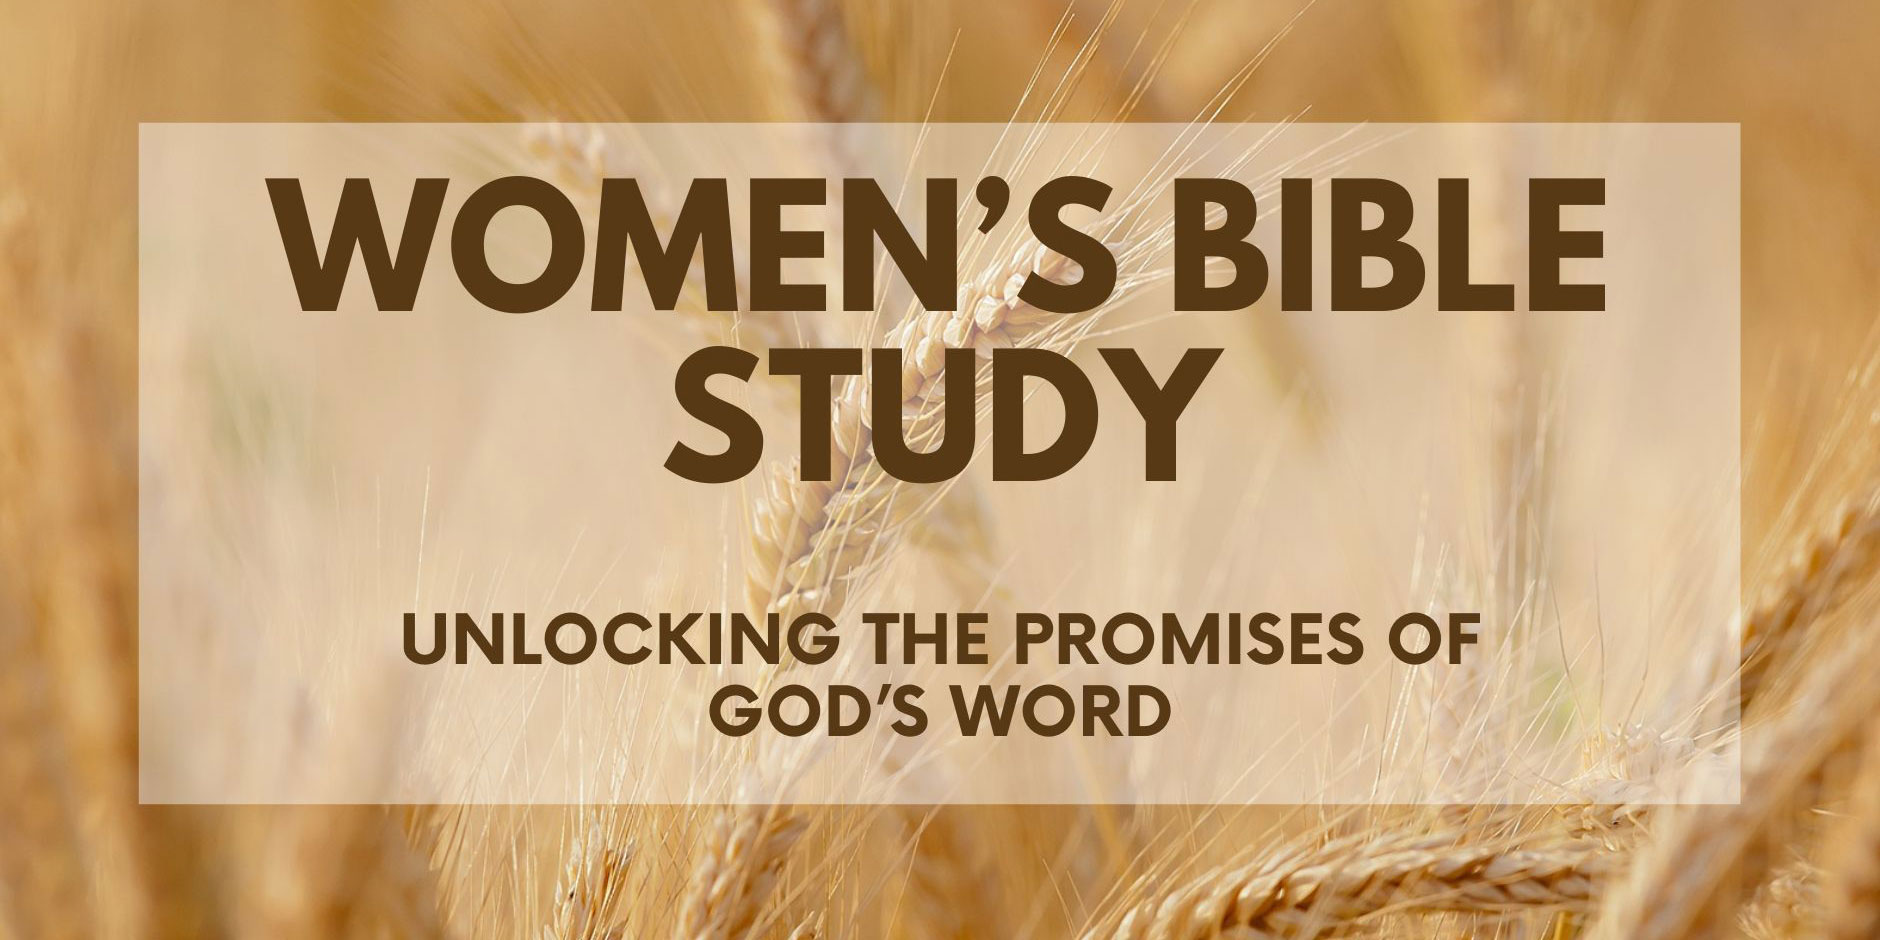 Women's Bible Study - Unlocking the Promises of God